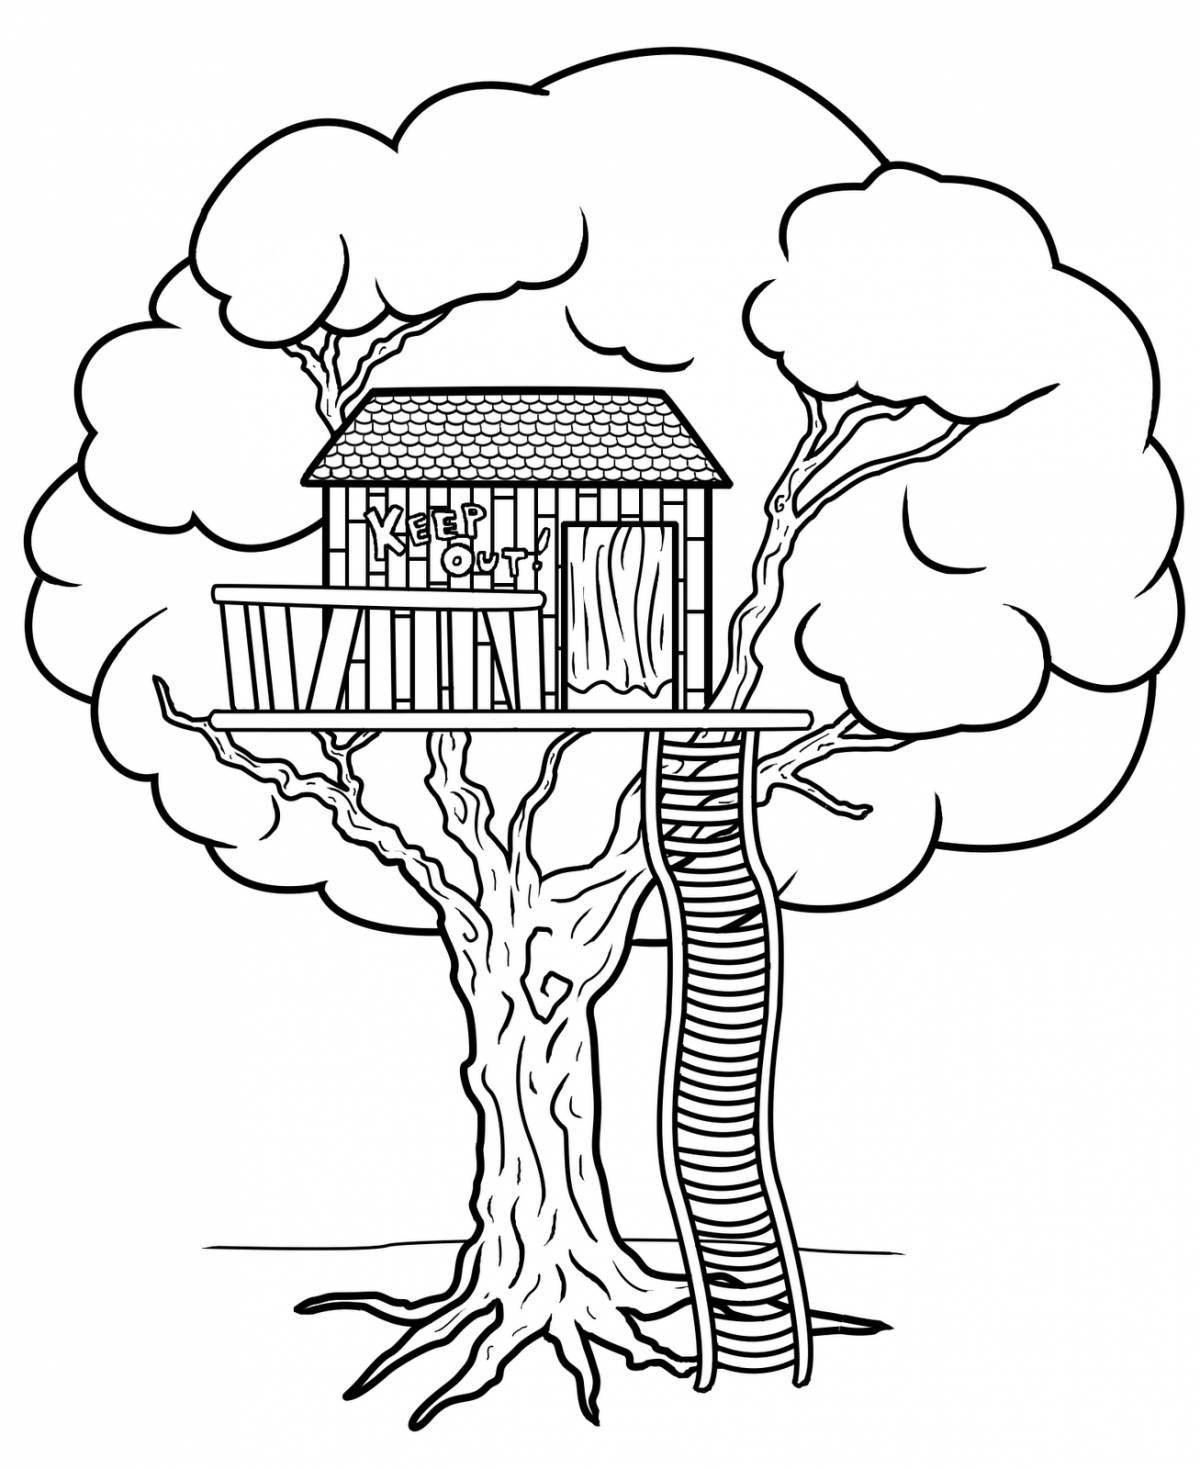 Tree house #4